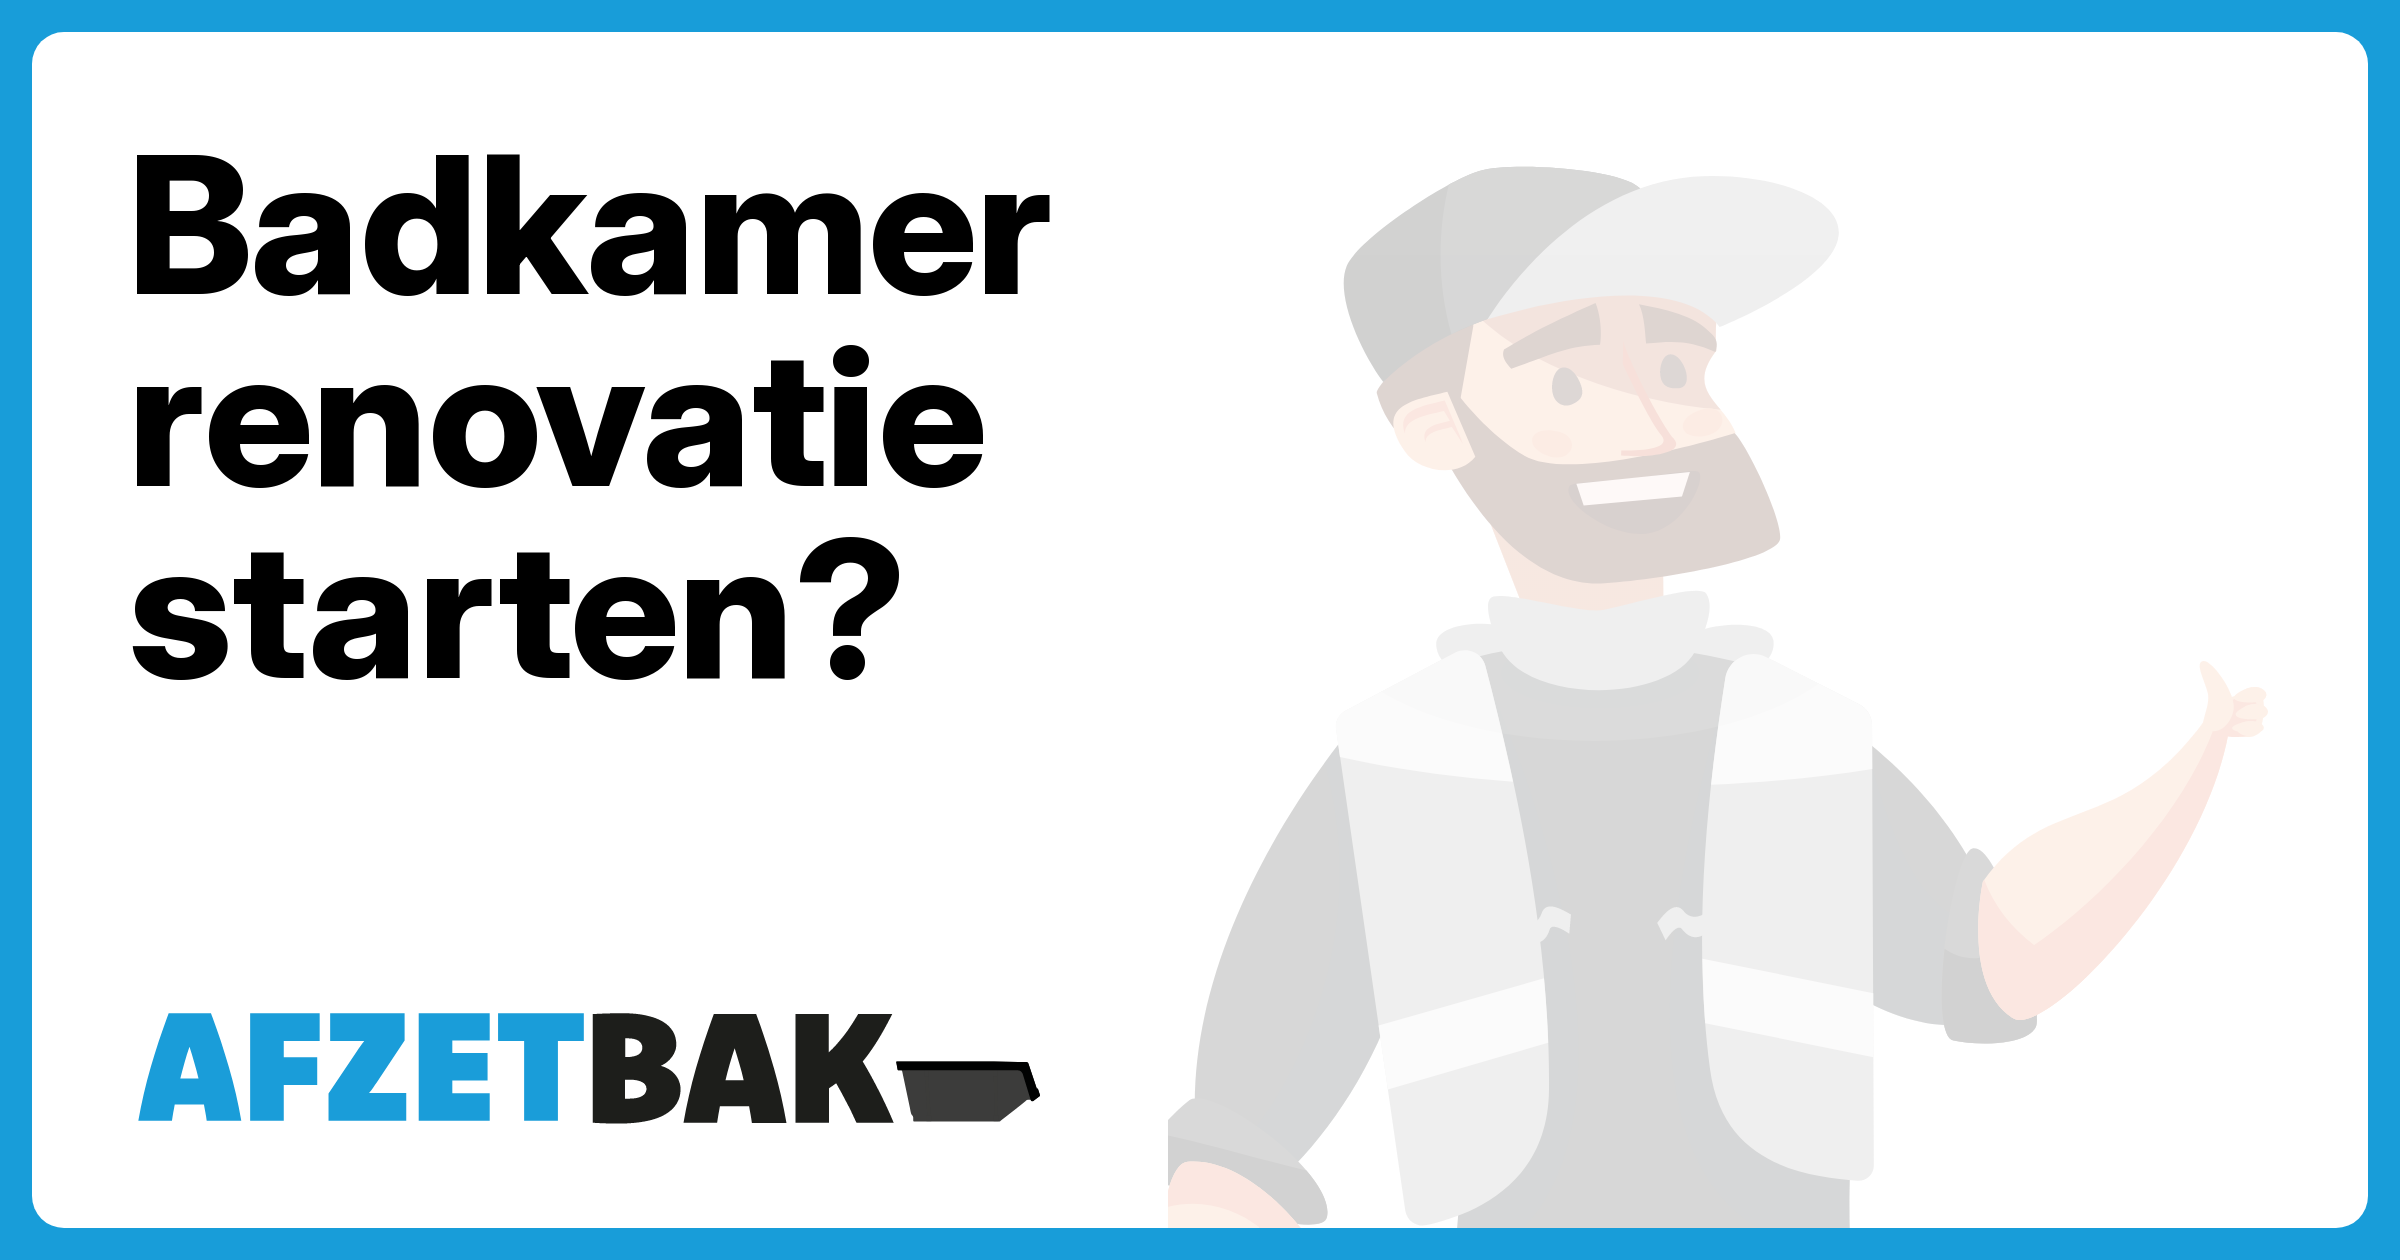 Badkamer renovatie starten? - Afzetbak.nl